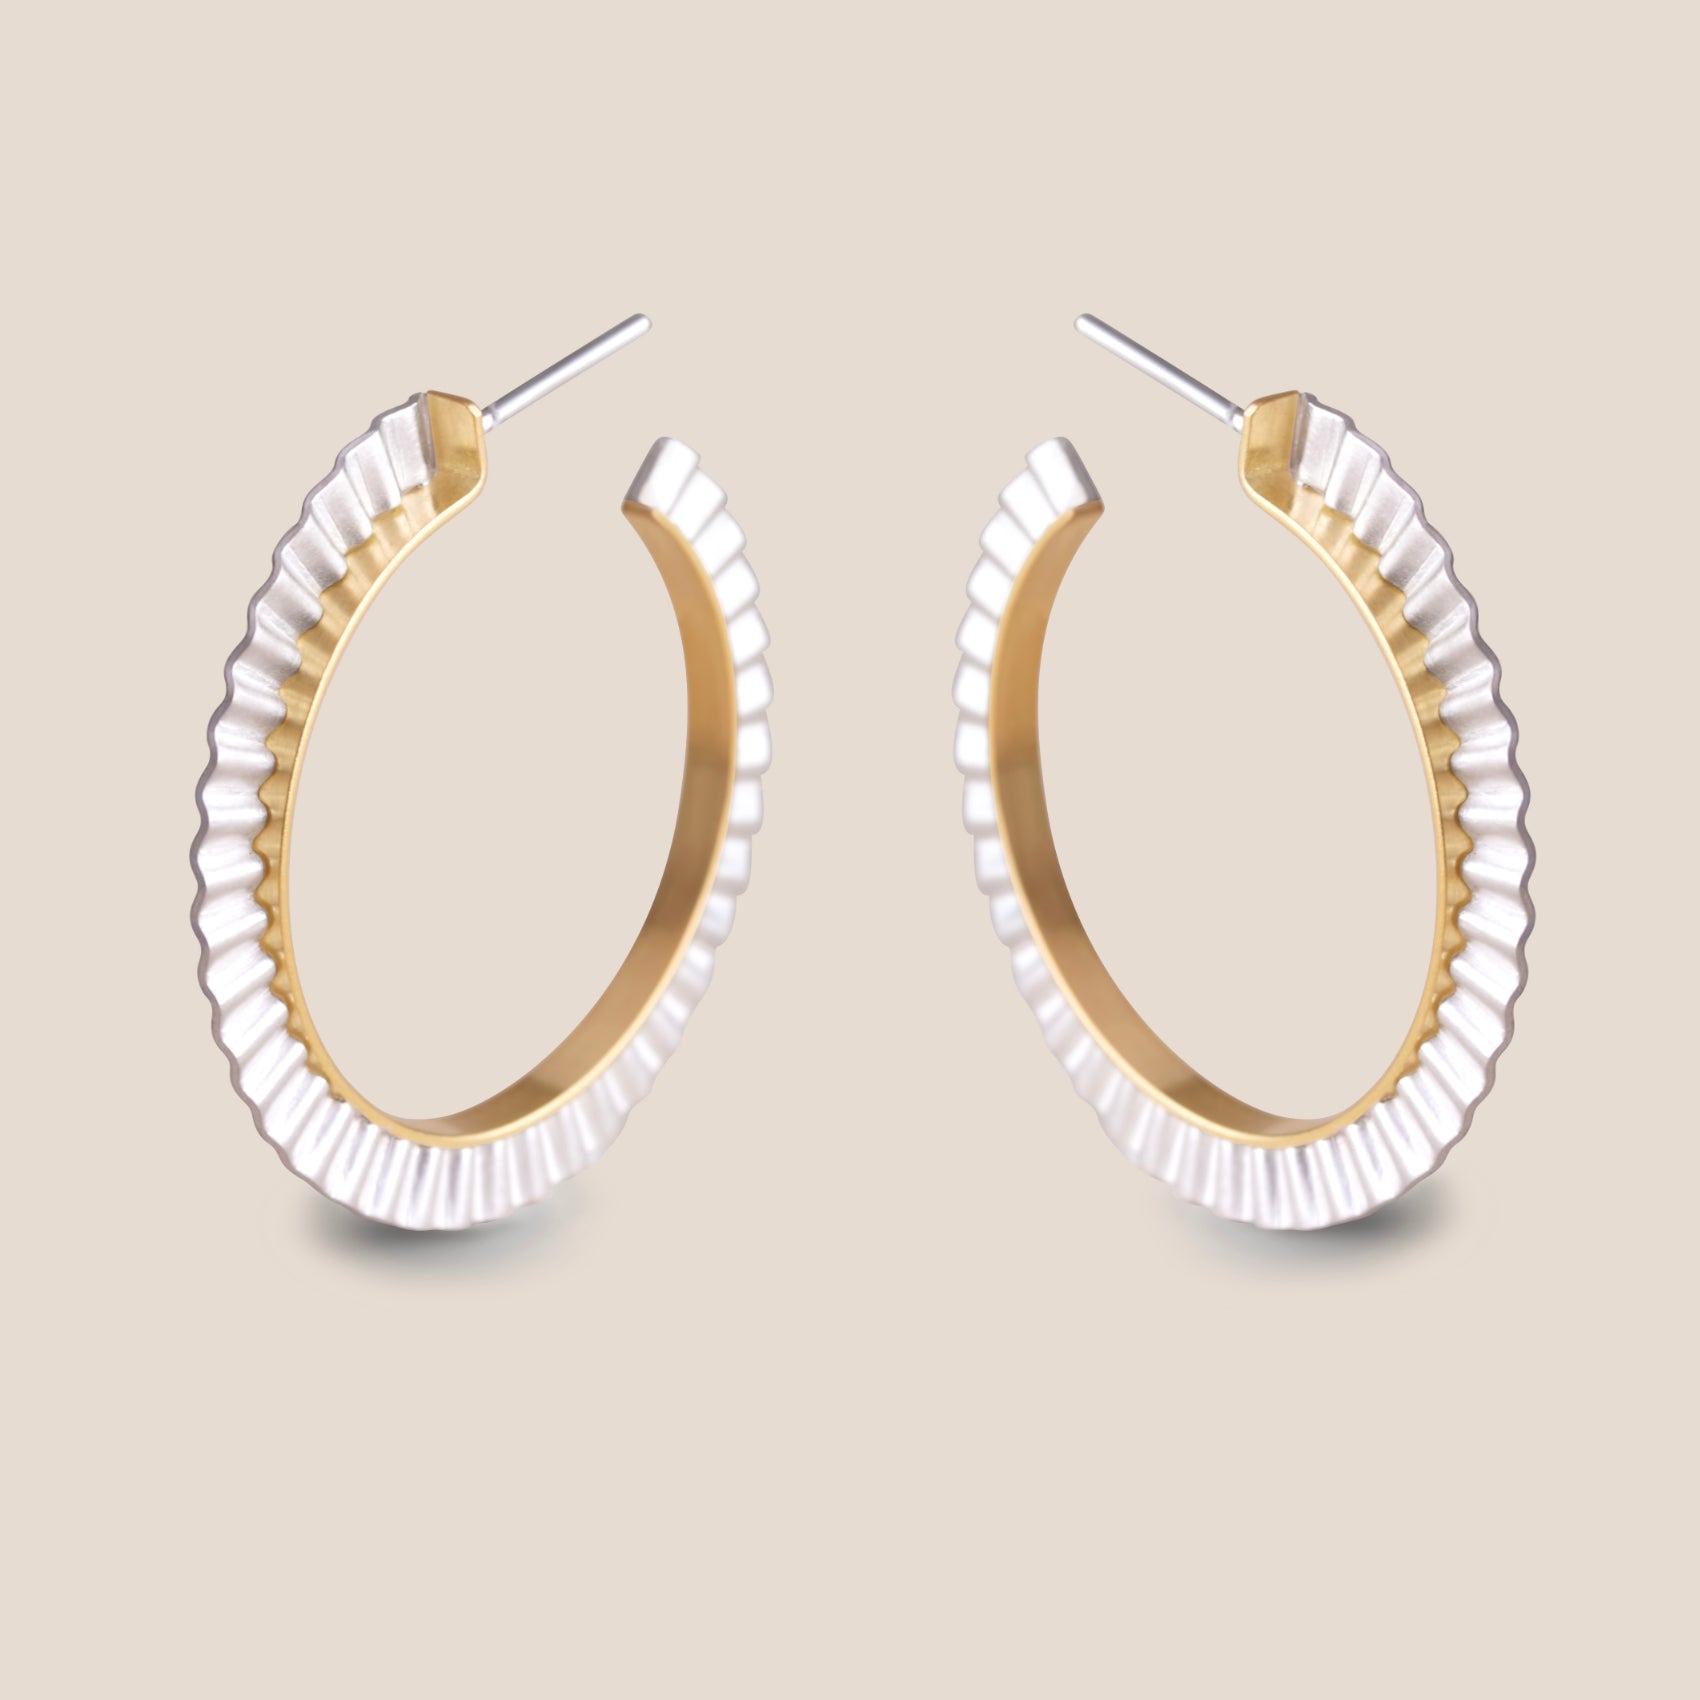 NEW - Strata Hoop Earrings - Silver & Gold